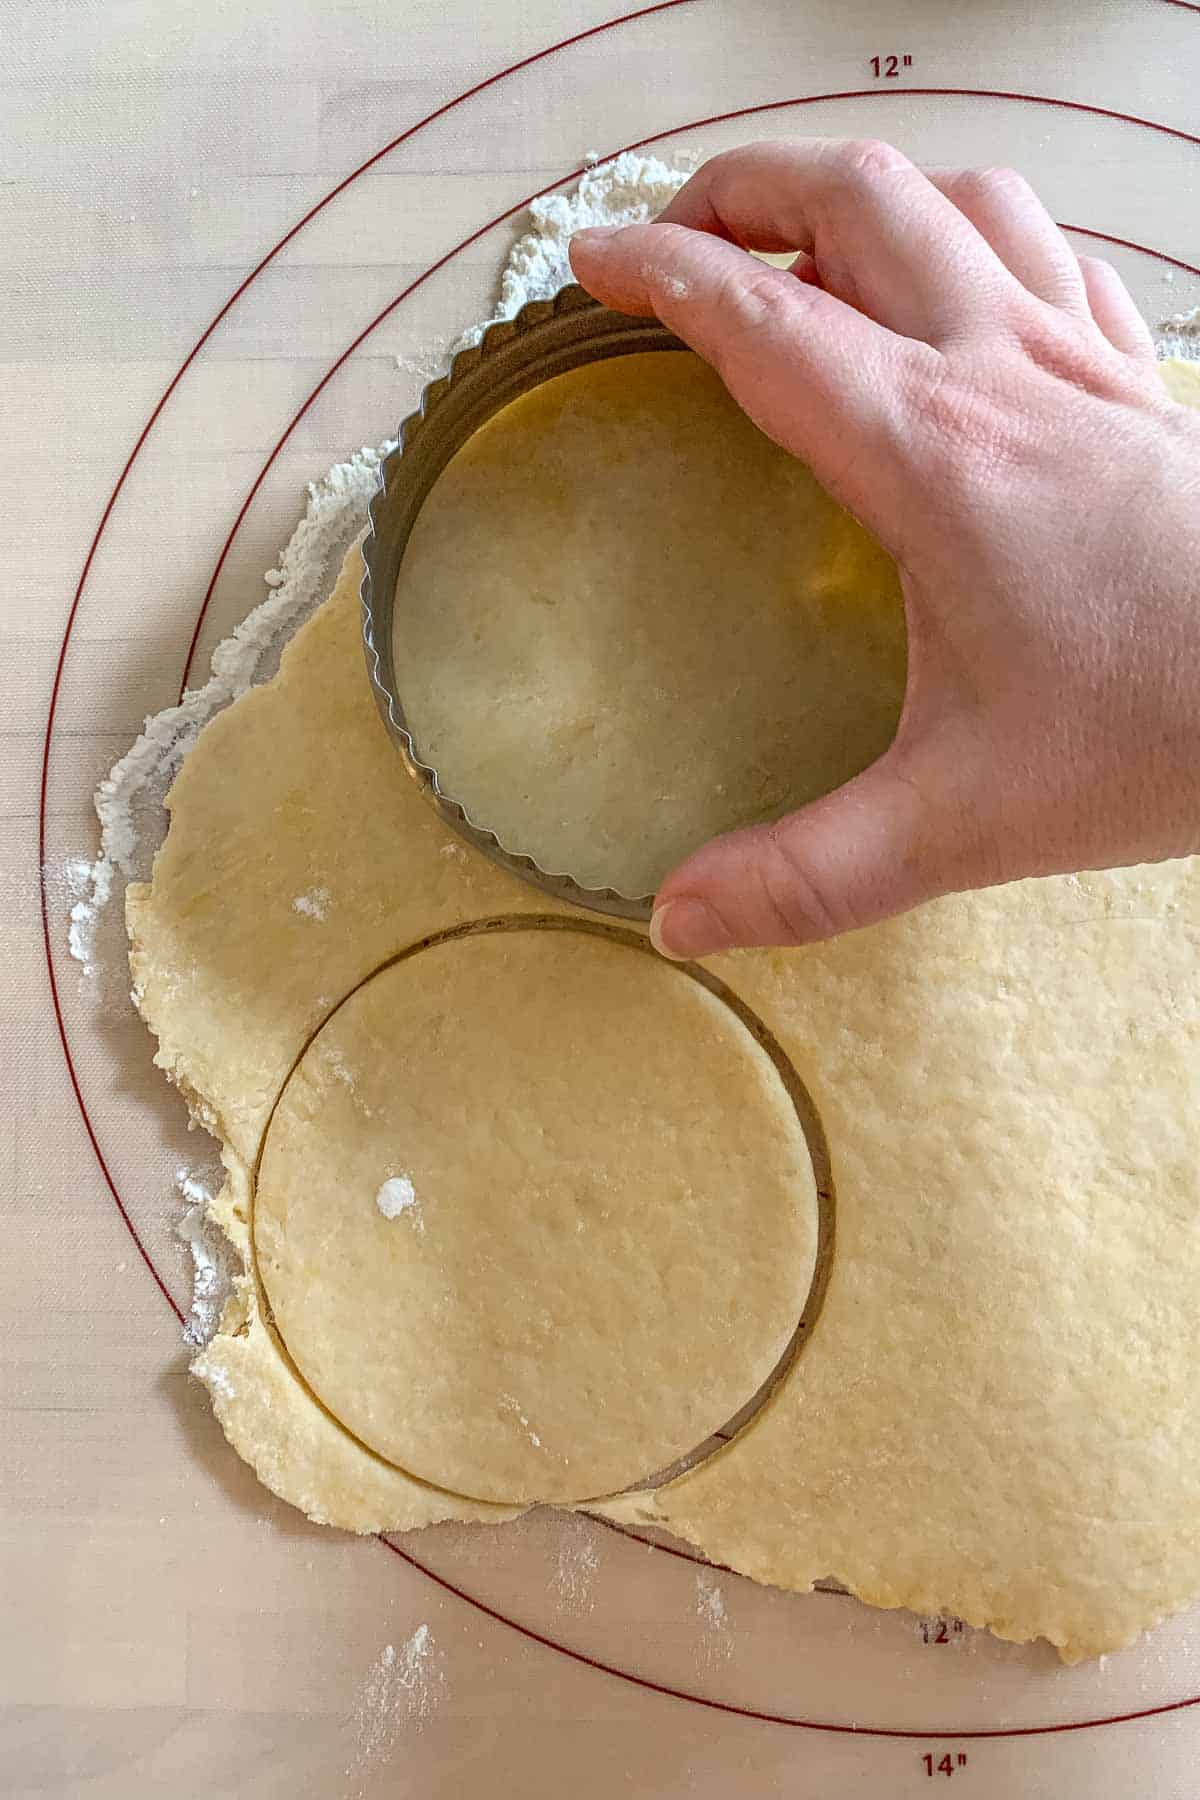 Using a round cutter to cut out empanada dough circles.